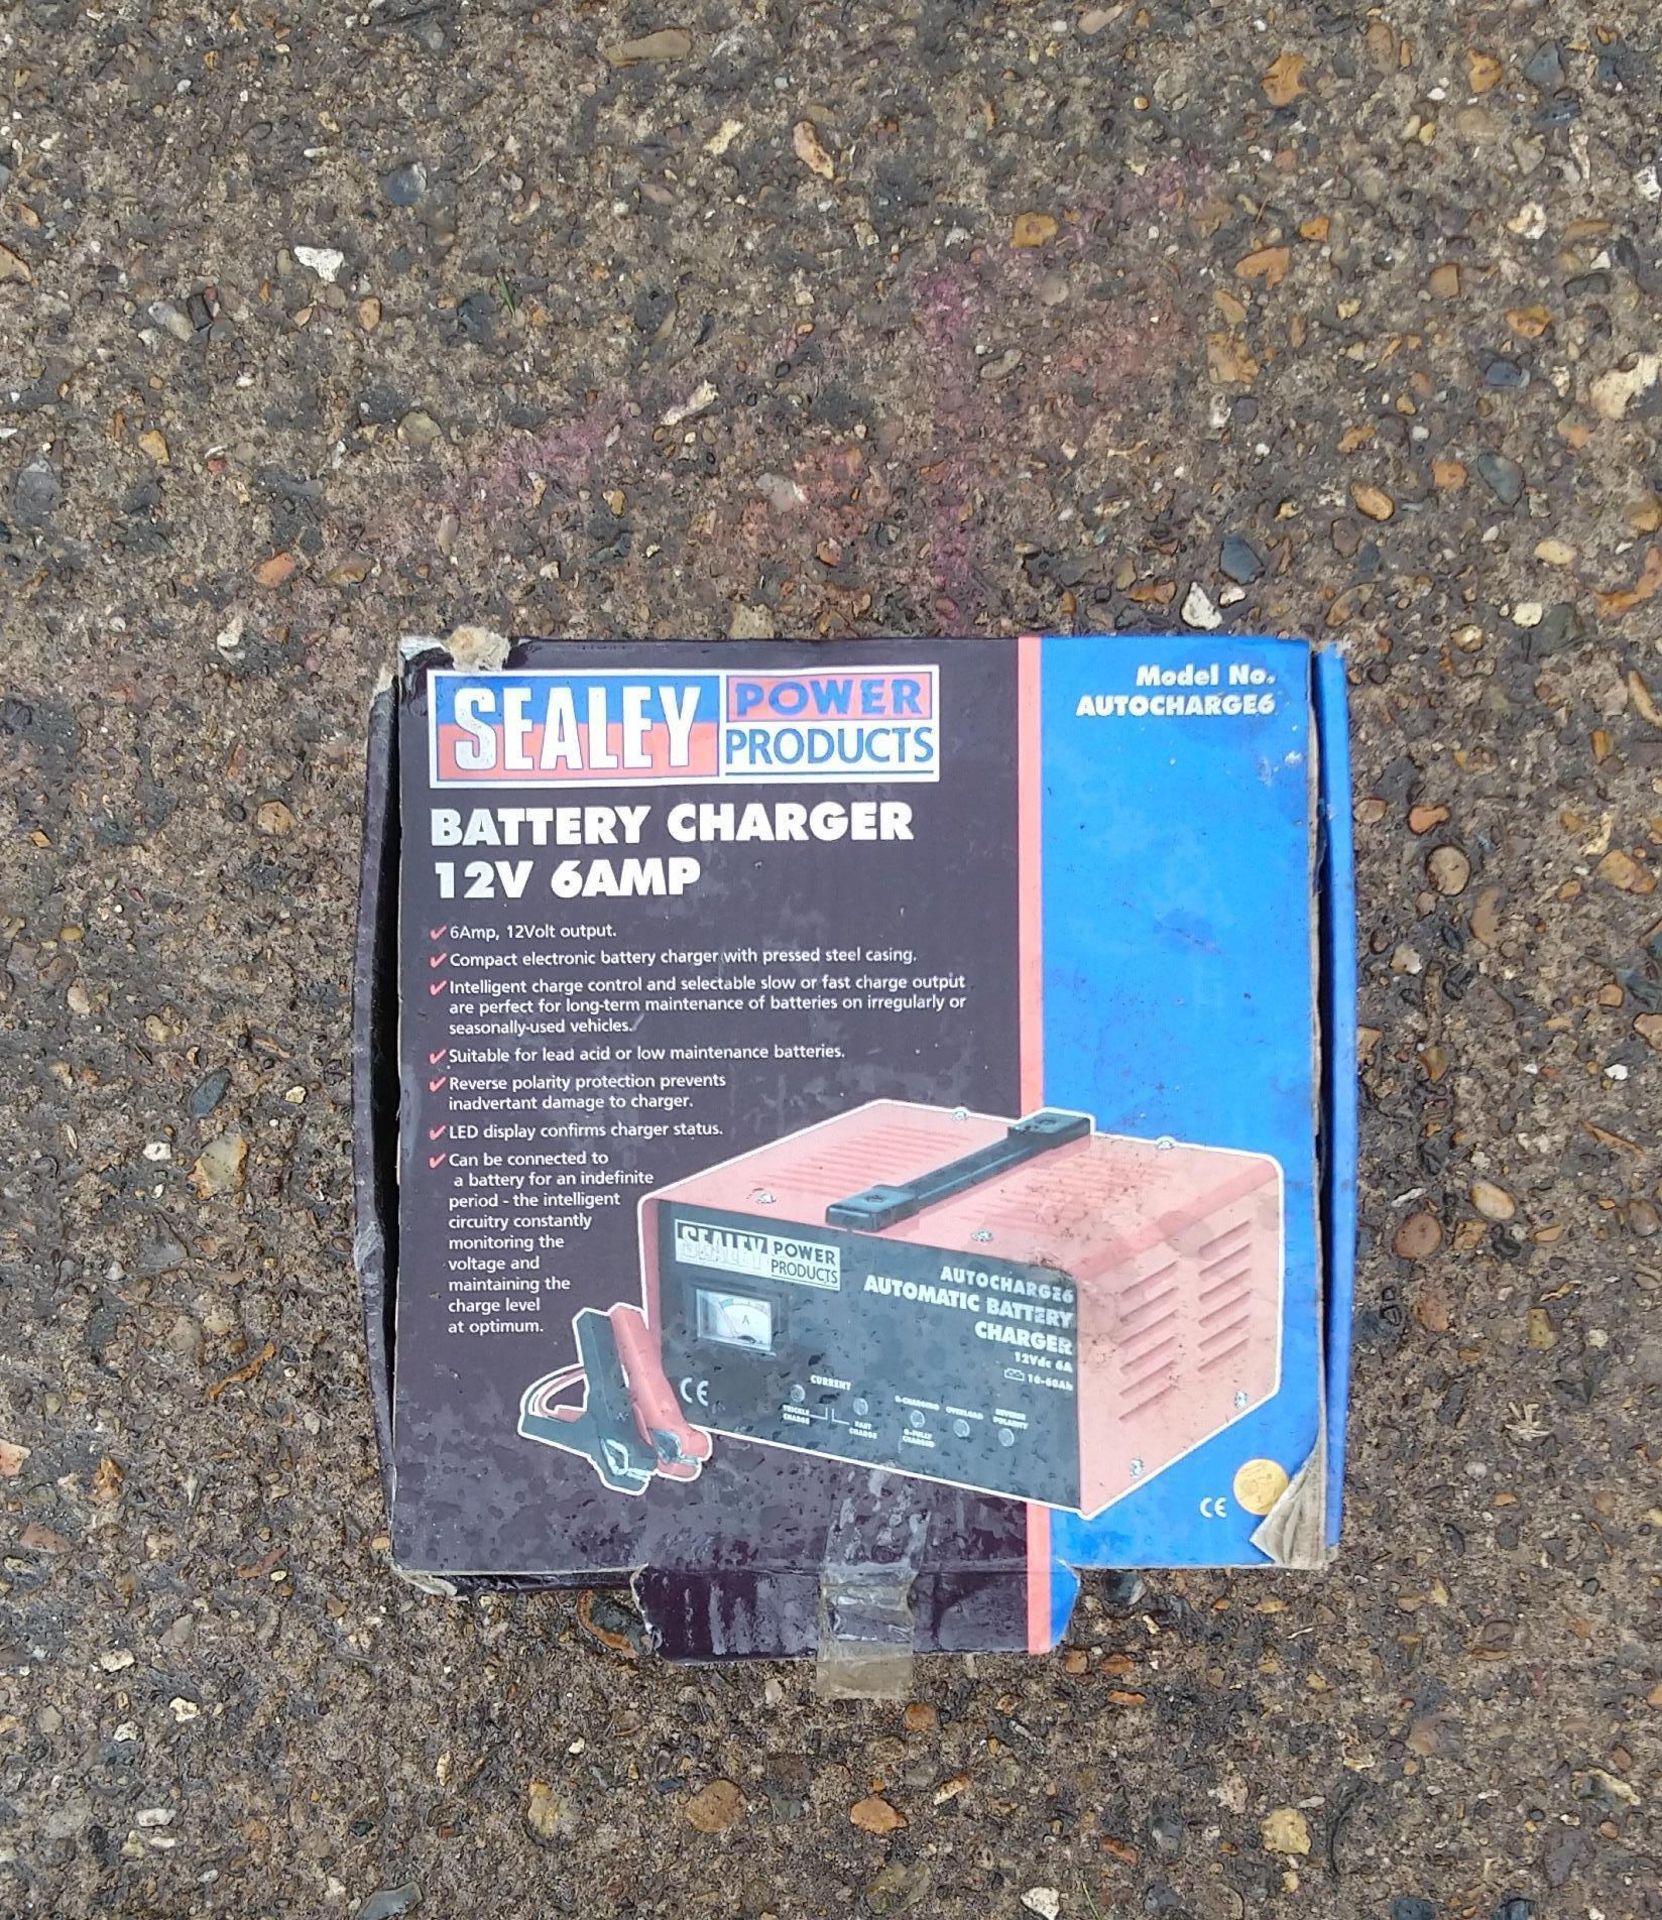 Sealey Battery Charger, 12v 6amp